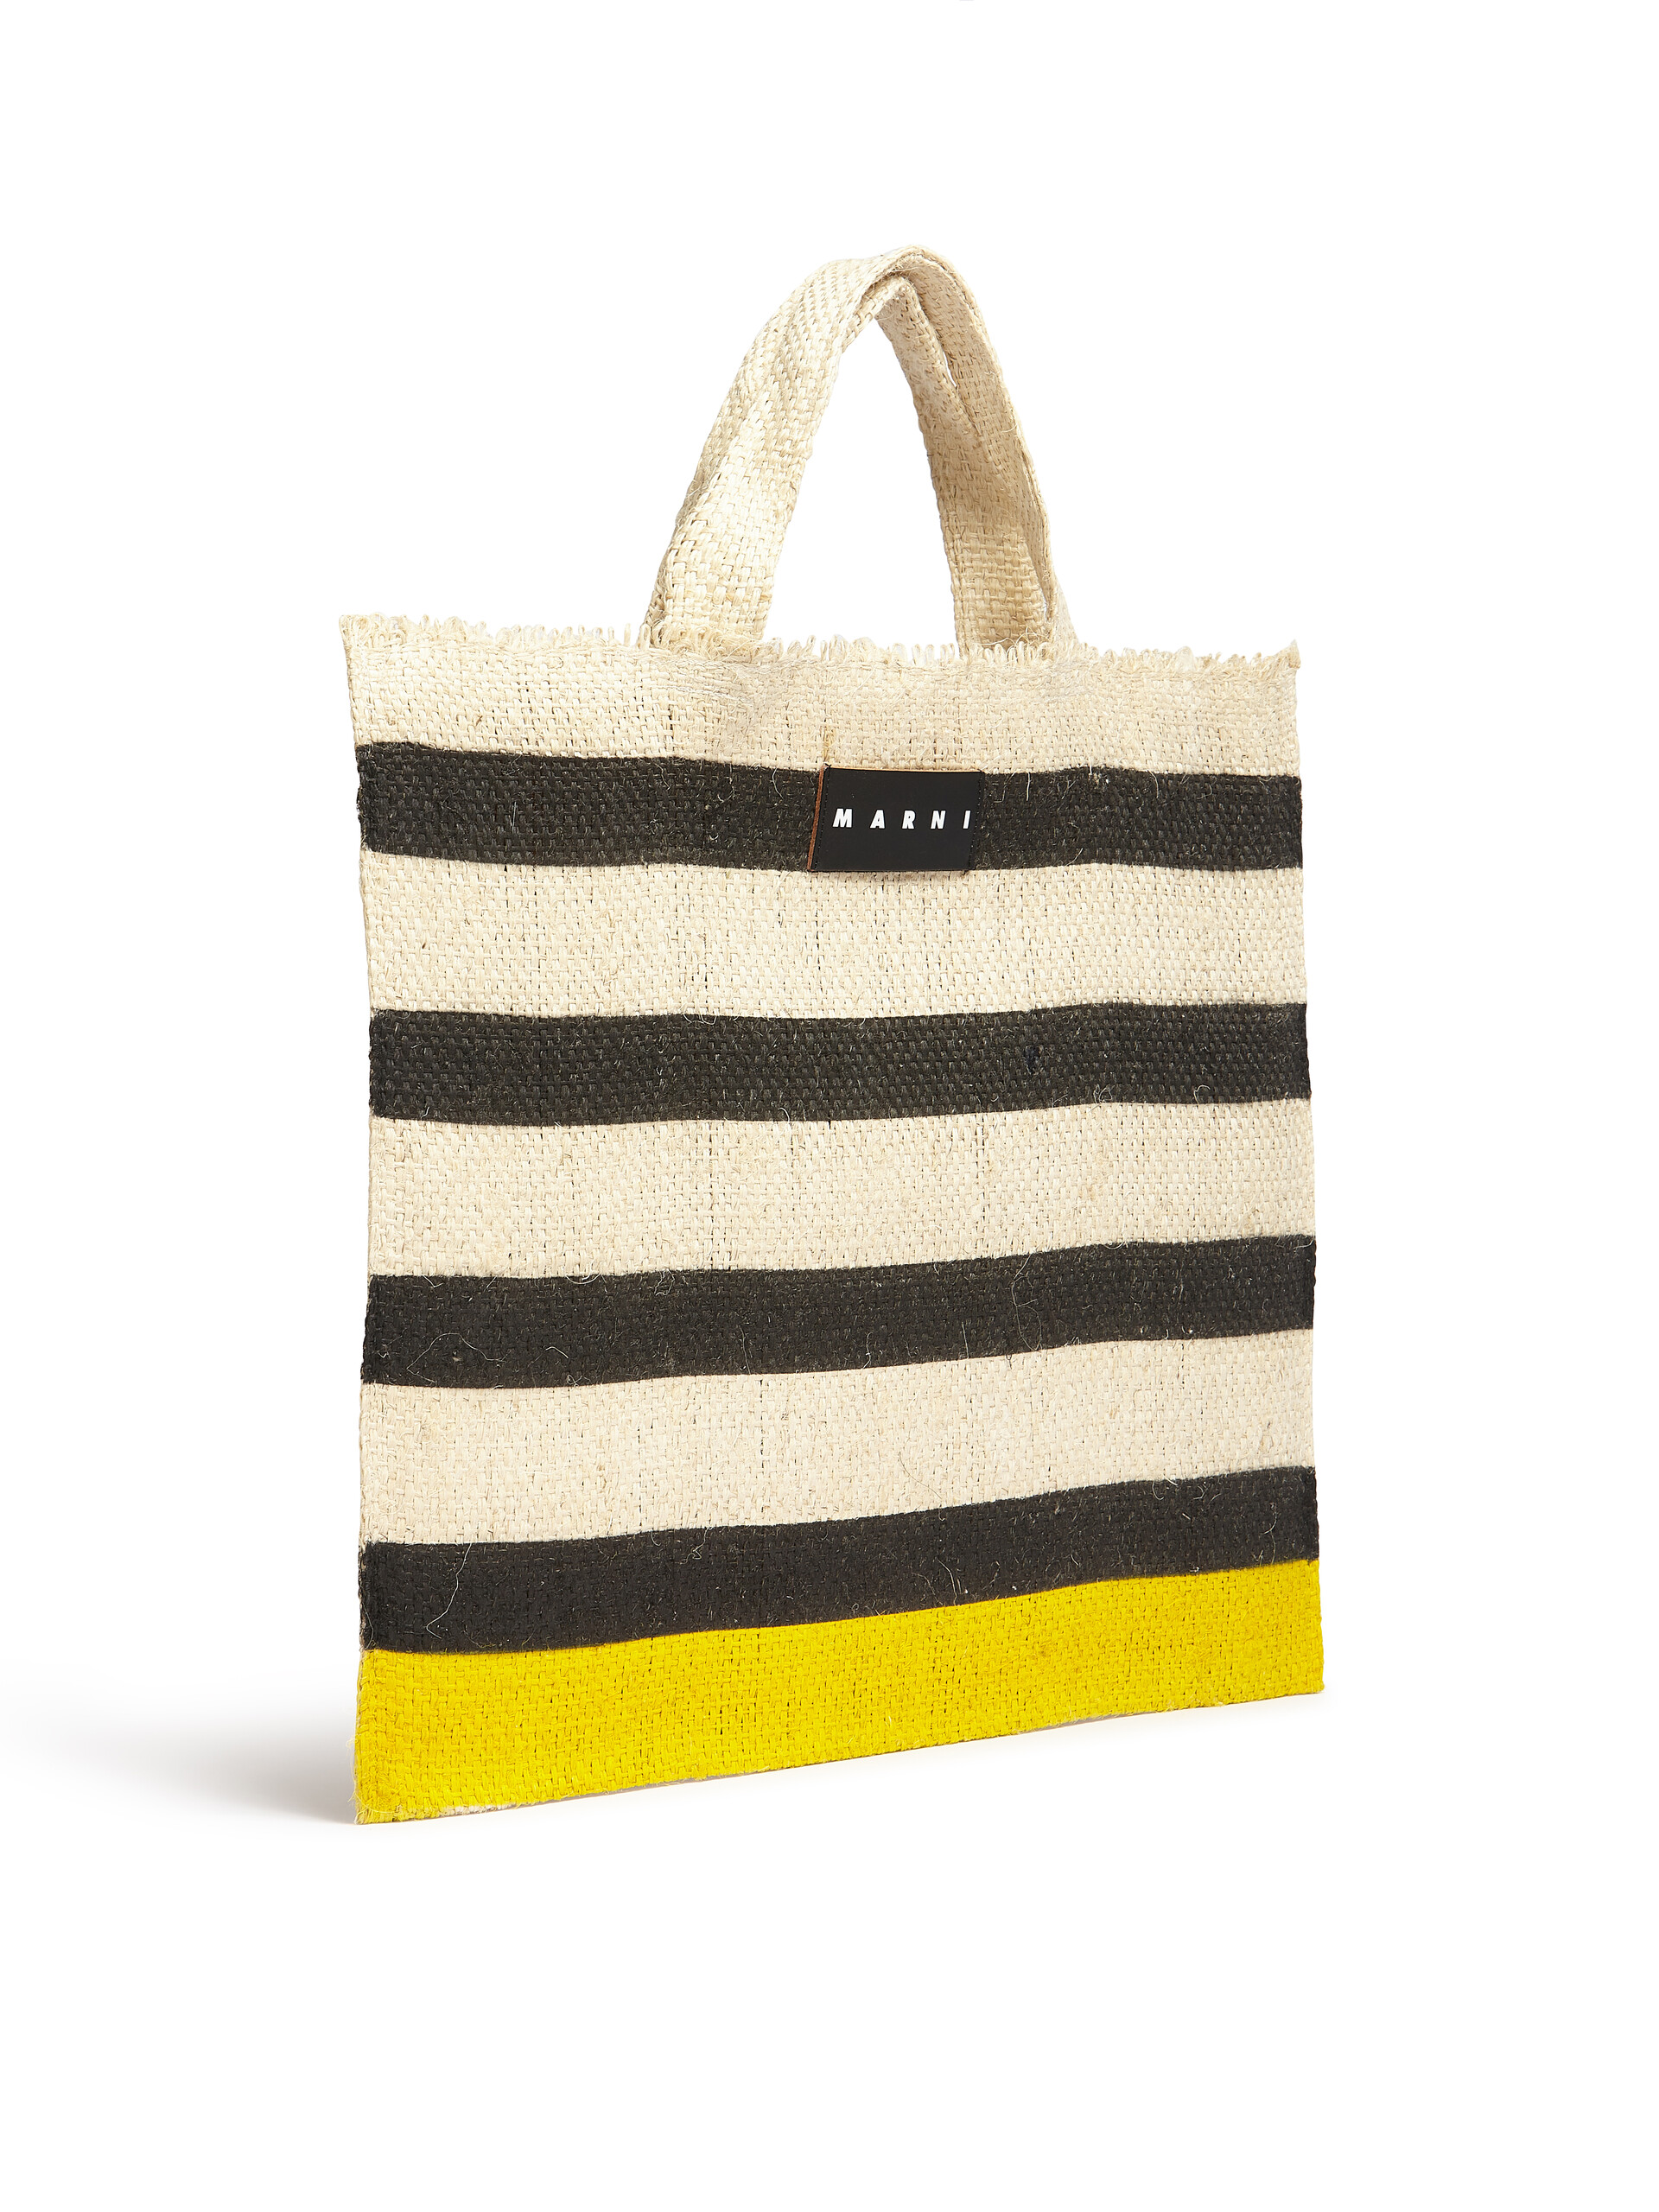 MARNI MARKET large bag in black and yellow natural fiber - Bags - Image 2